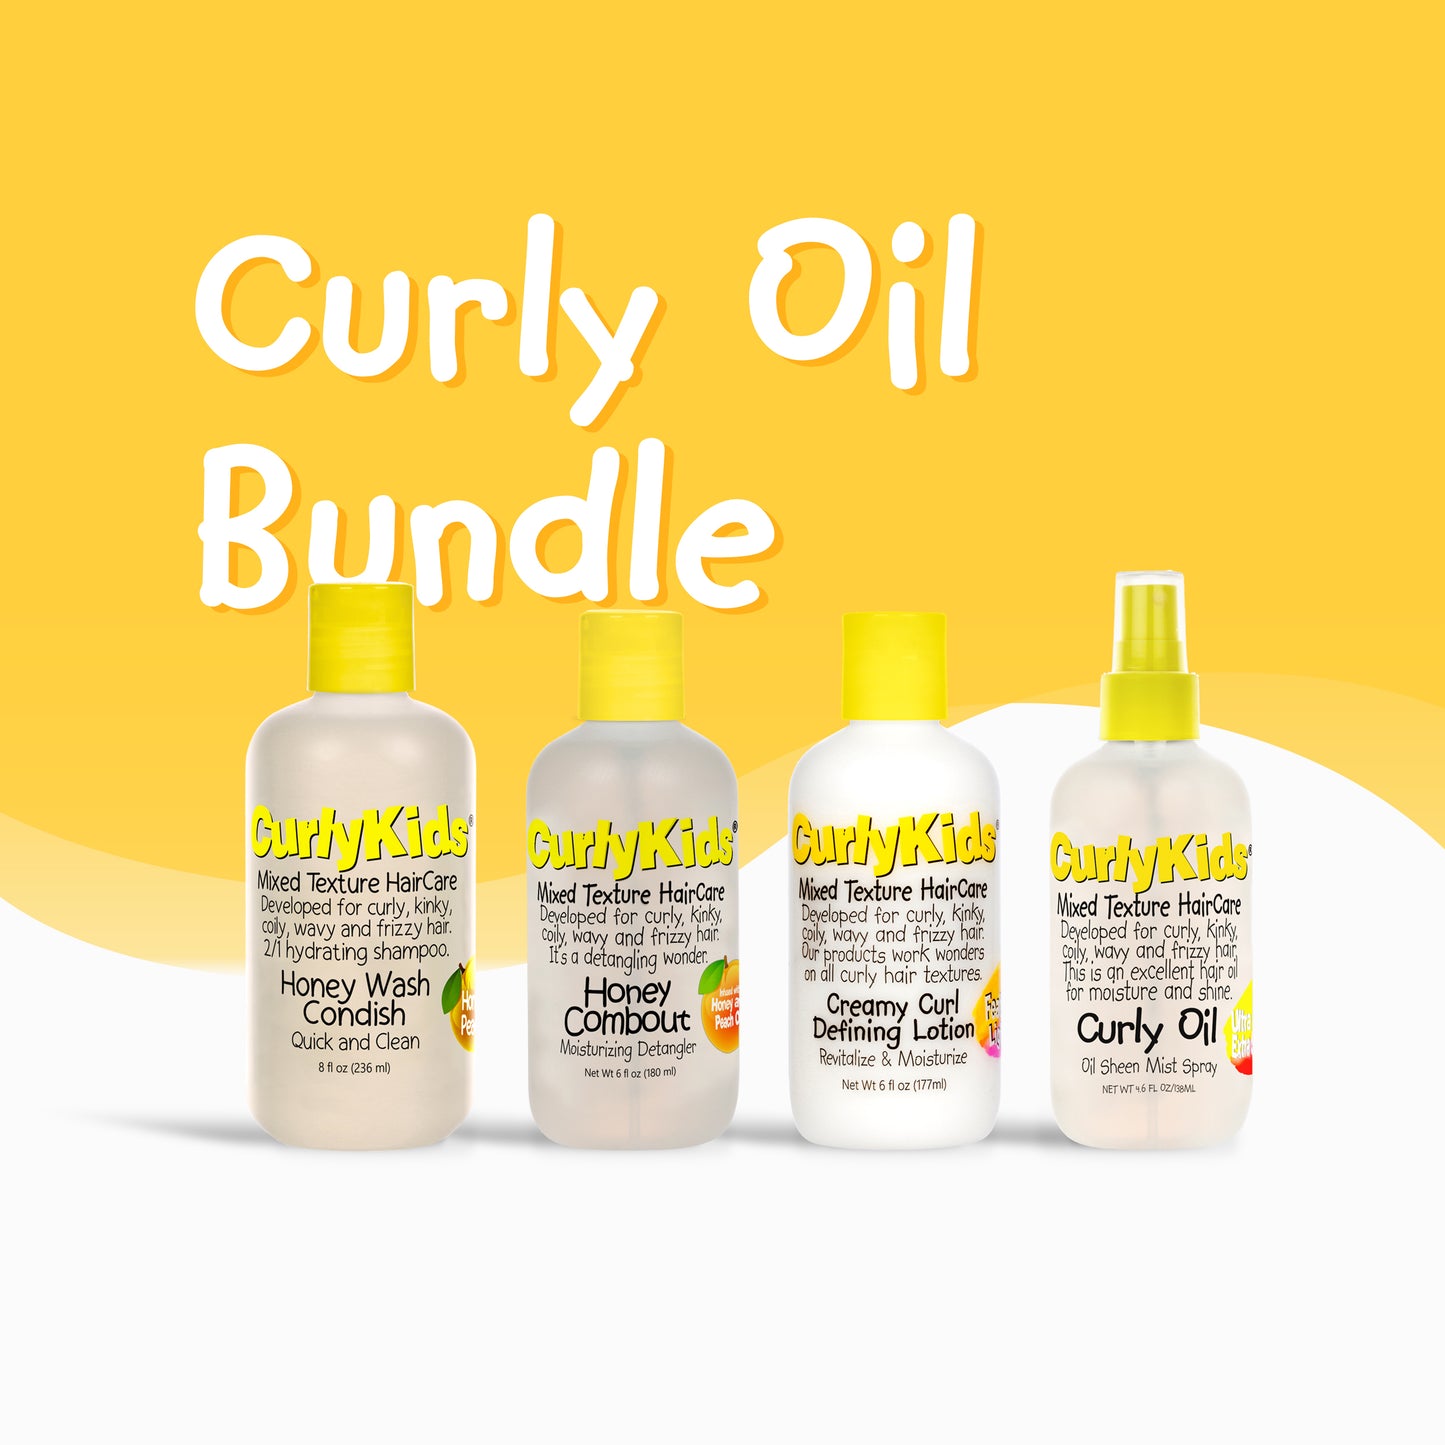 Curly Oil Bundle